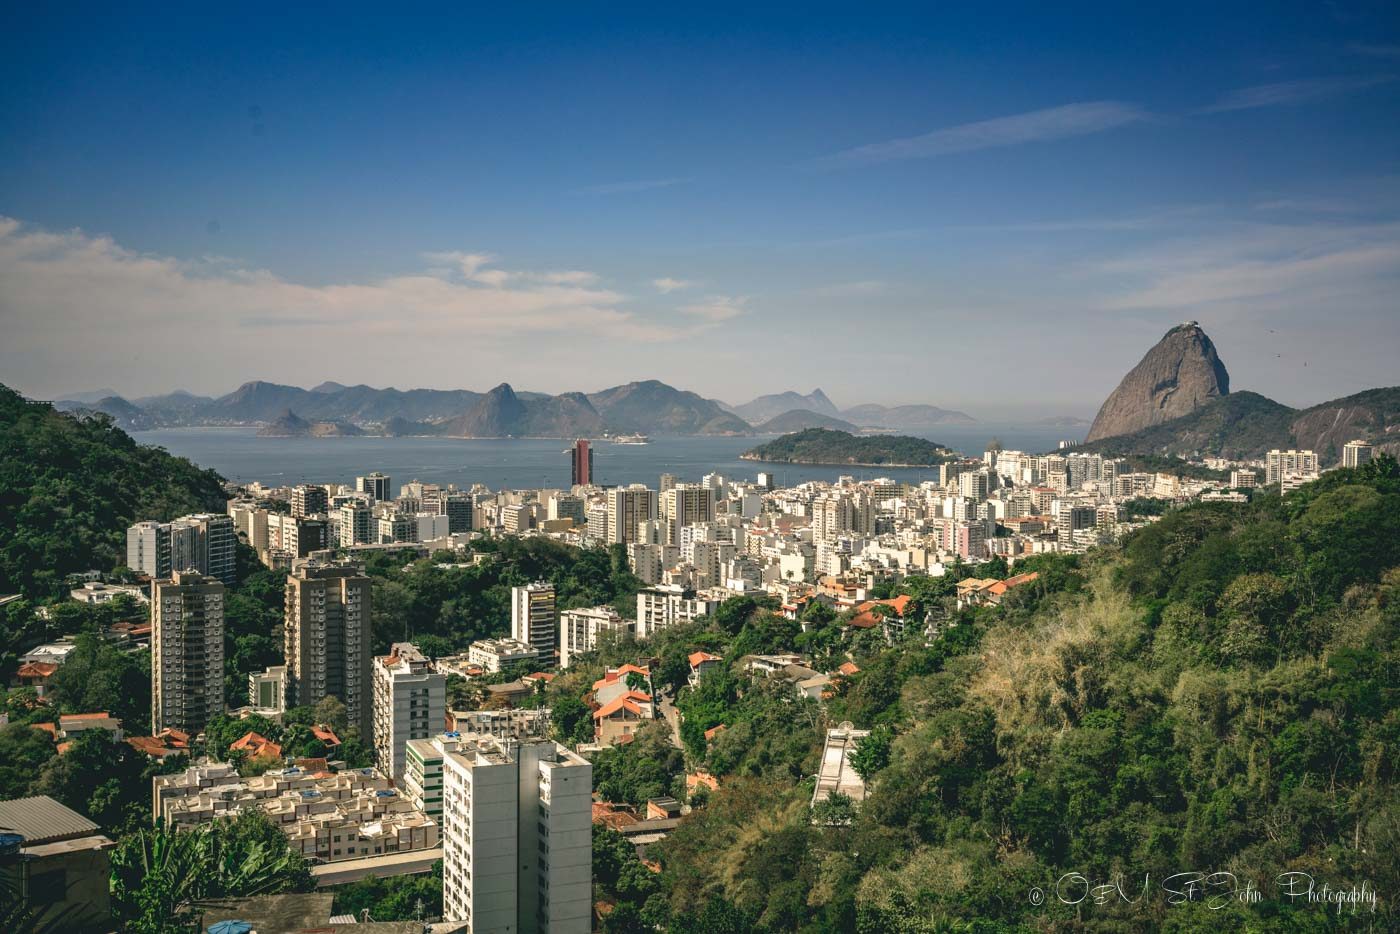 View of the Sugarloaf Mountain in Rio de Janeiro, Brazil